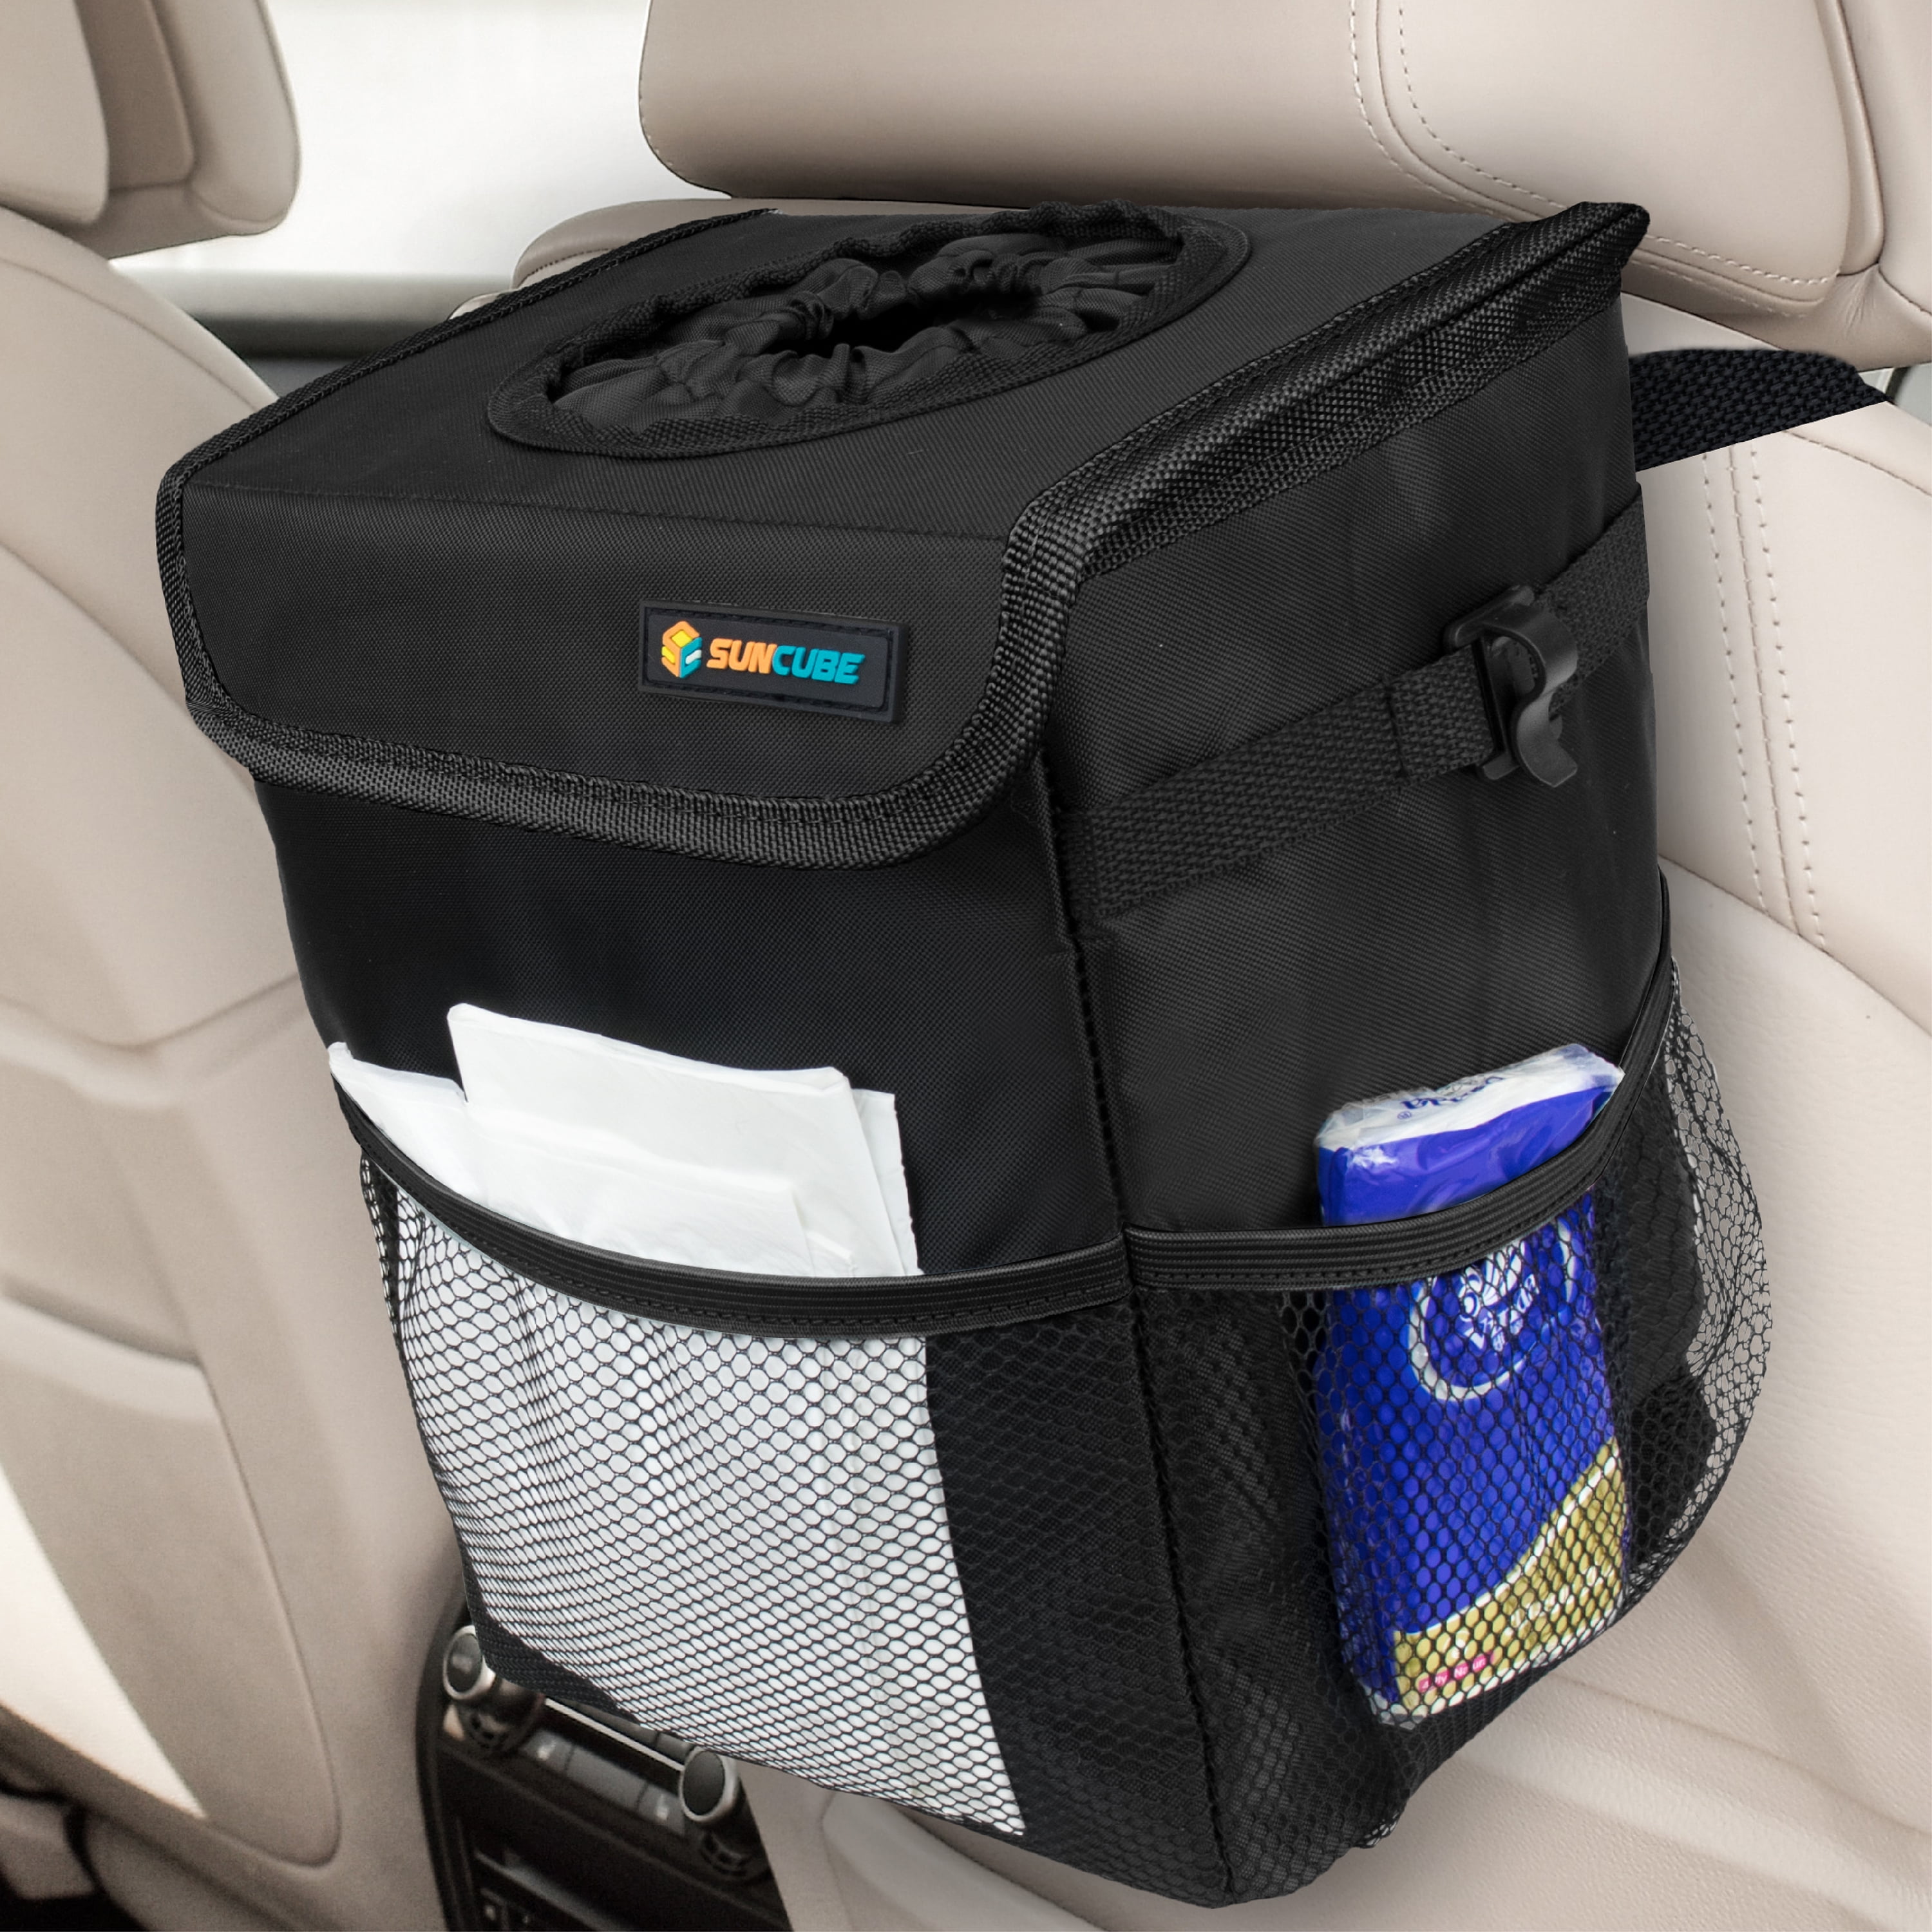 Auto Storage Organizer Car Back Seat Trash Holder Travel Bag Hanger Pouch Black